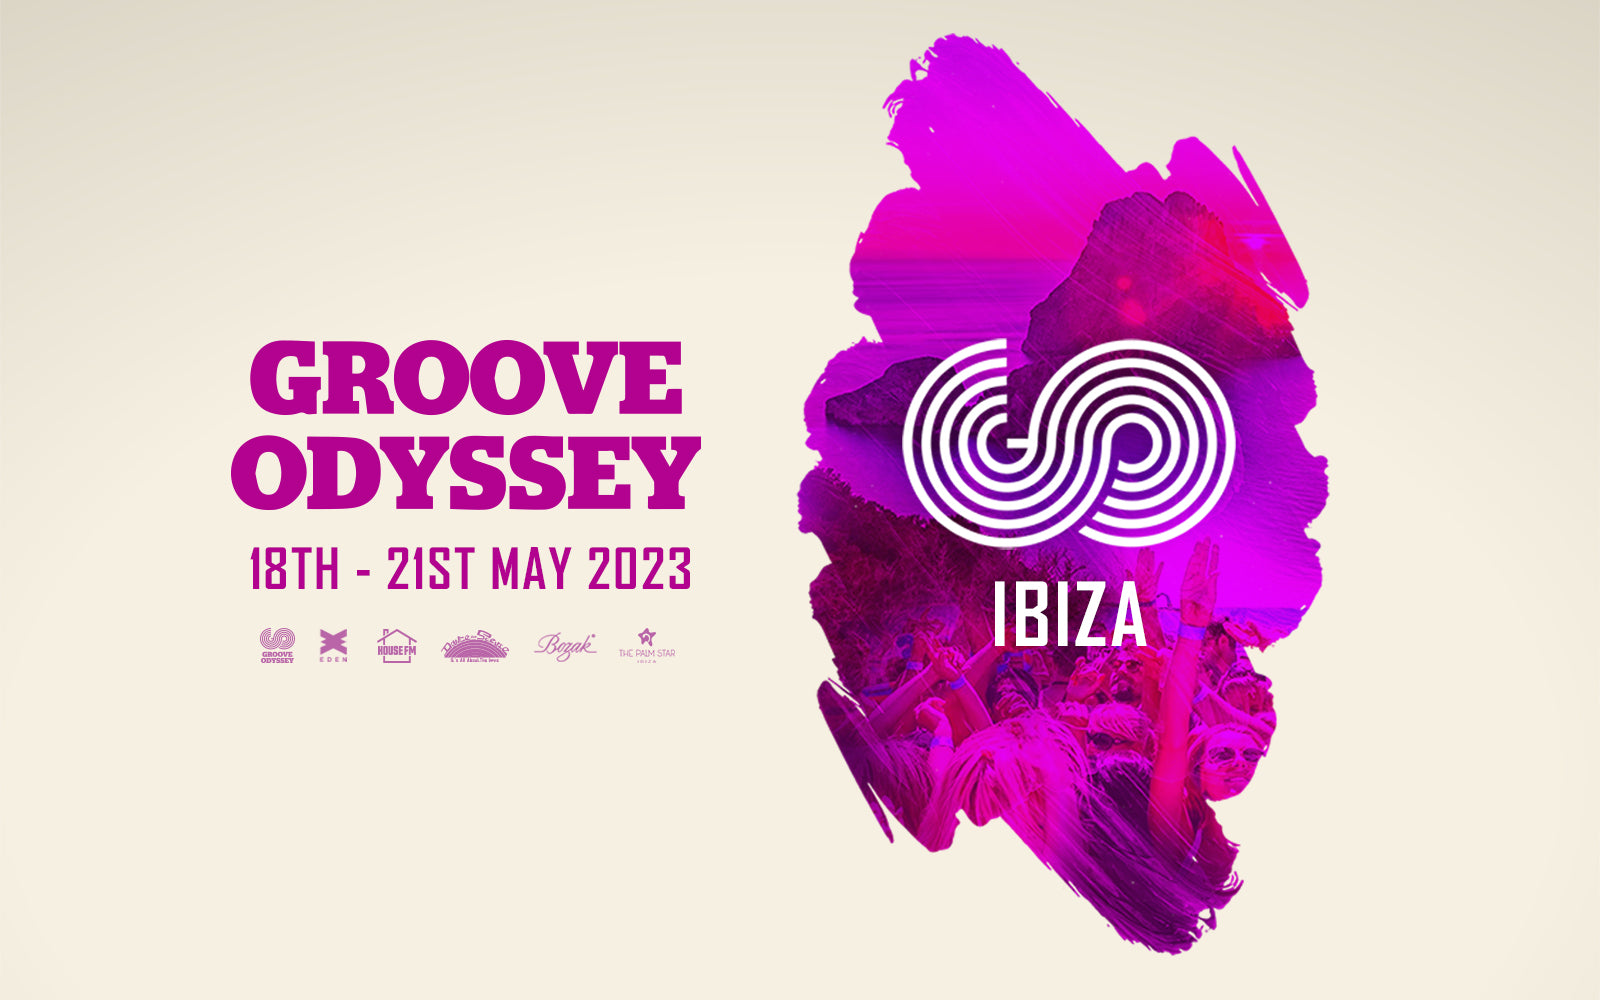 Ибица 2023. Ибица Odyssey. Odyssey Groove Jinx mp3. Roger Jordan Ibiza sessions.